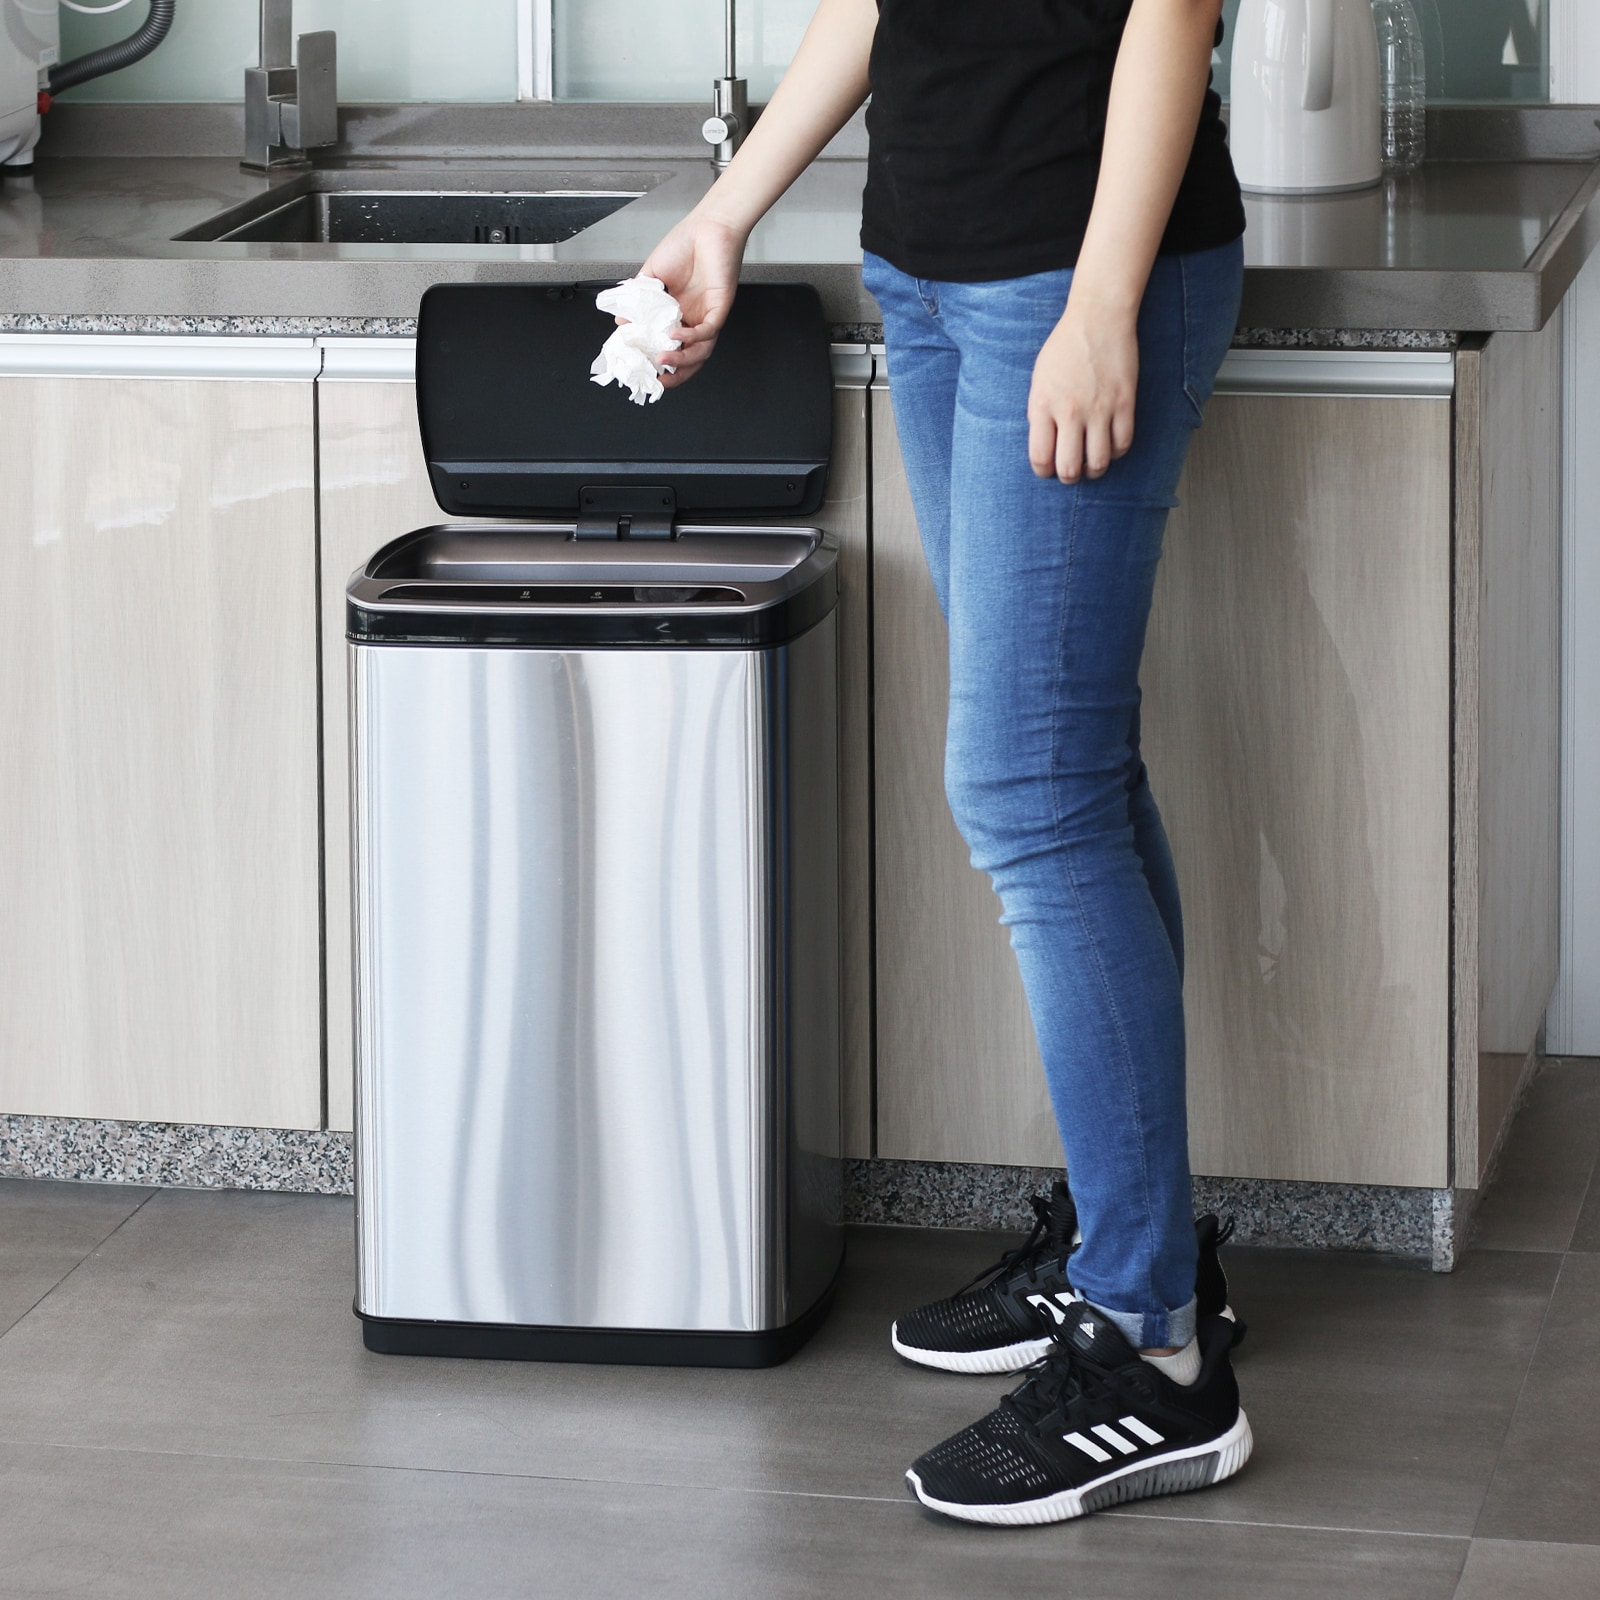 Dkeli Kitchen Trash Can 13 Gallon Garbage Can Automatic Sensor